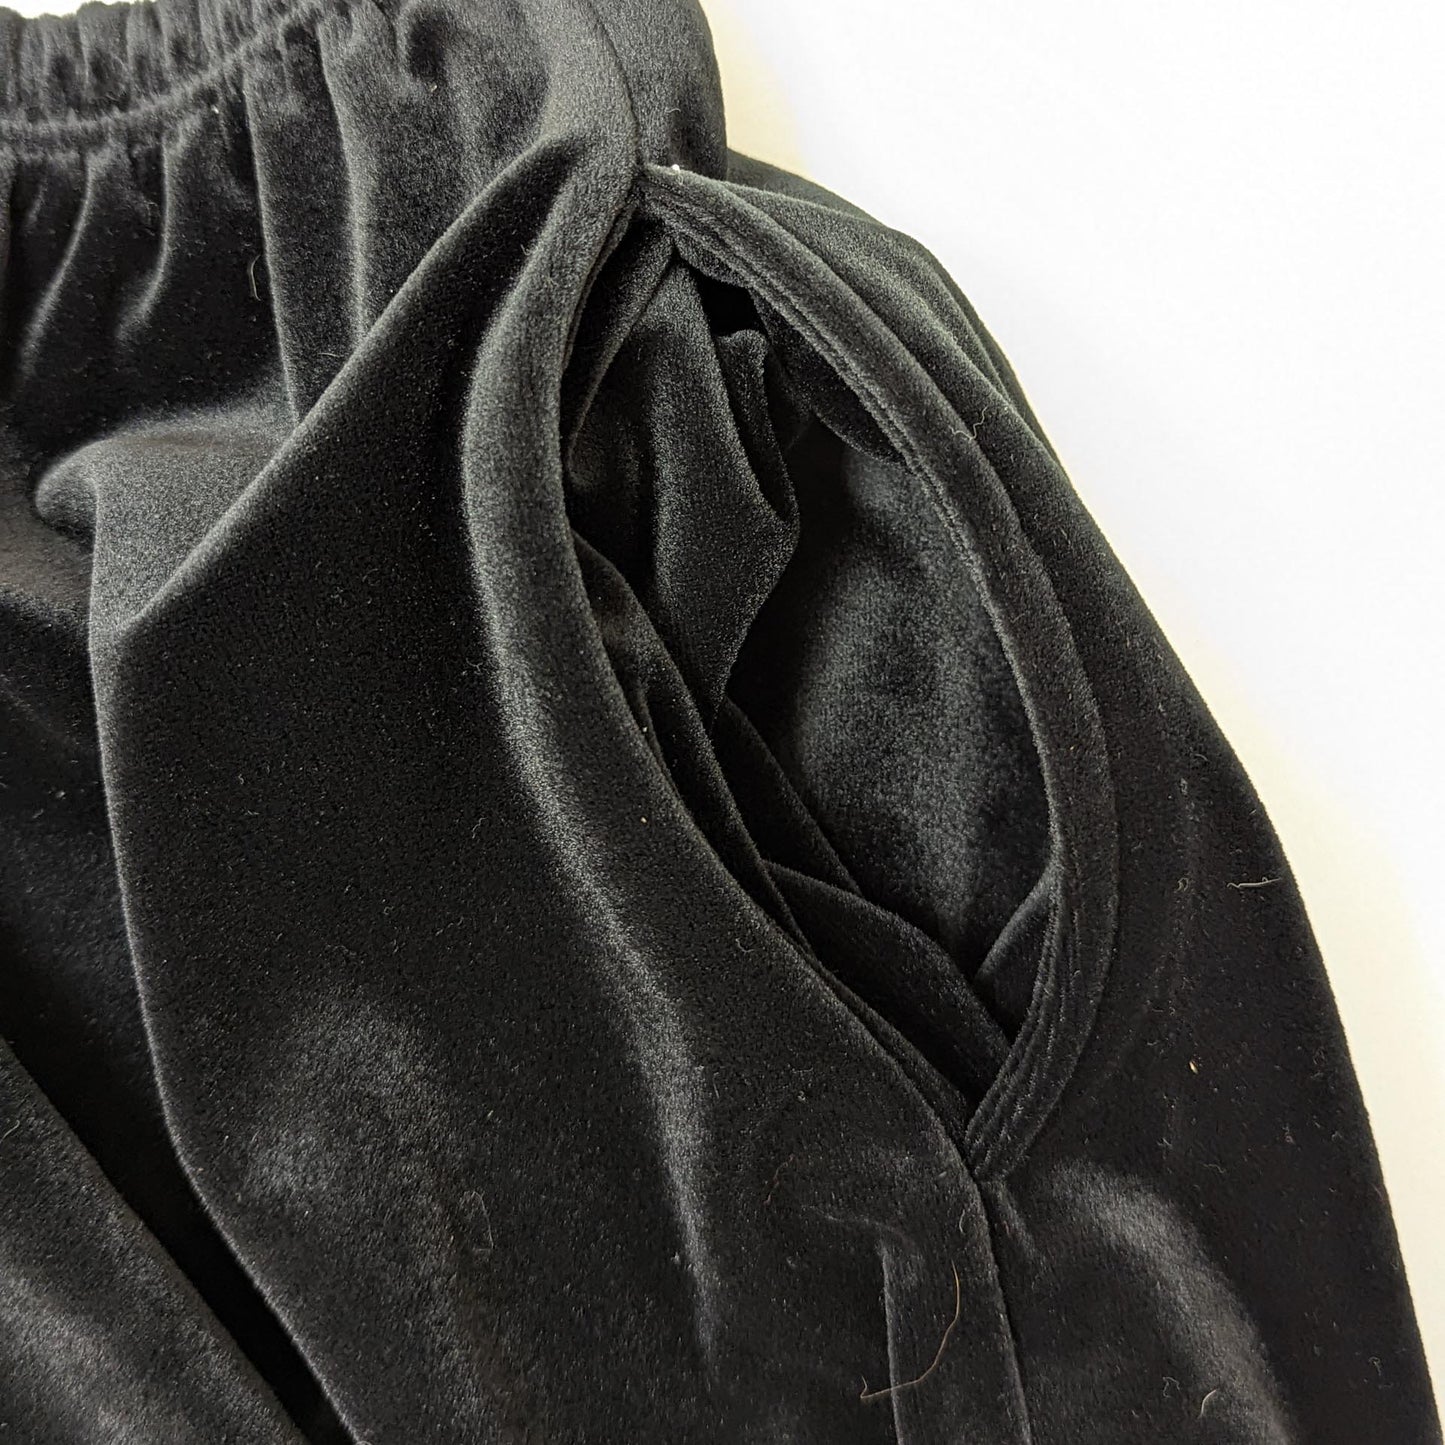 Vintage Miss Accent Act III Fashions Black Velour Track Suit Bottoms Sz 34 Pants ILGWU